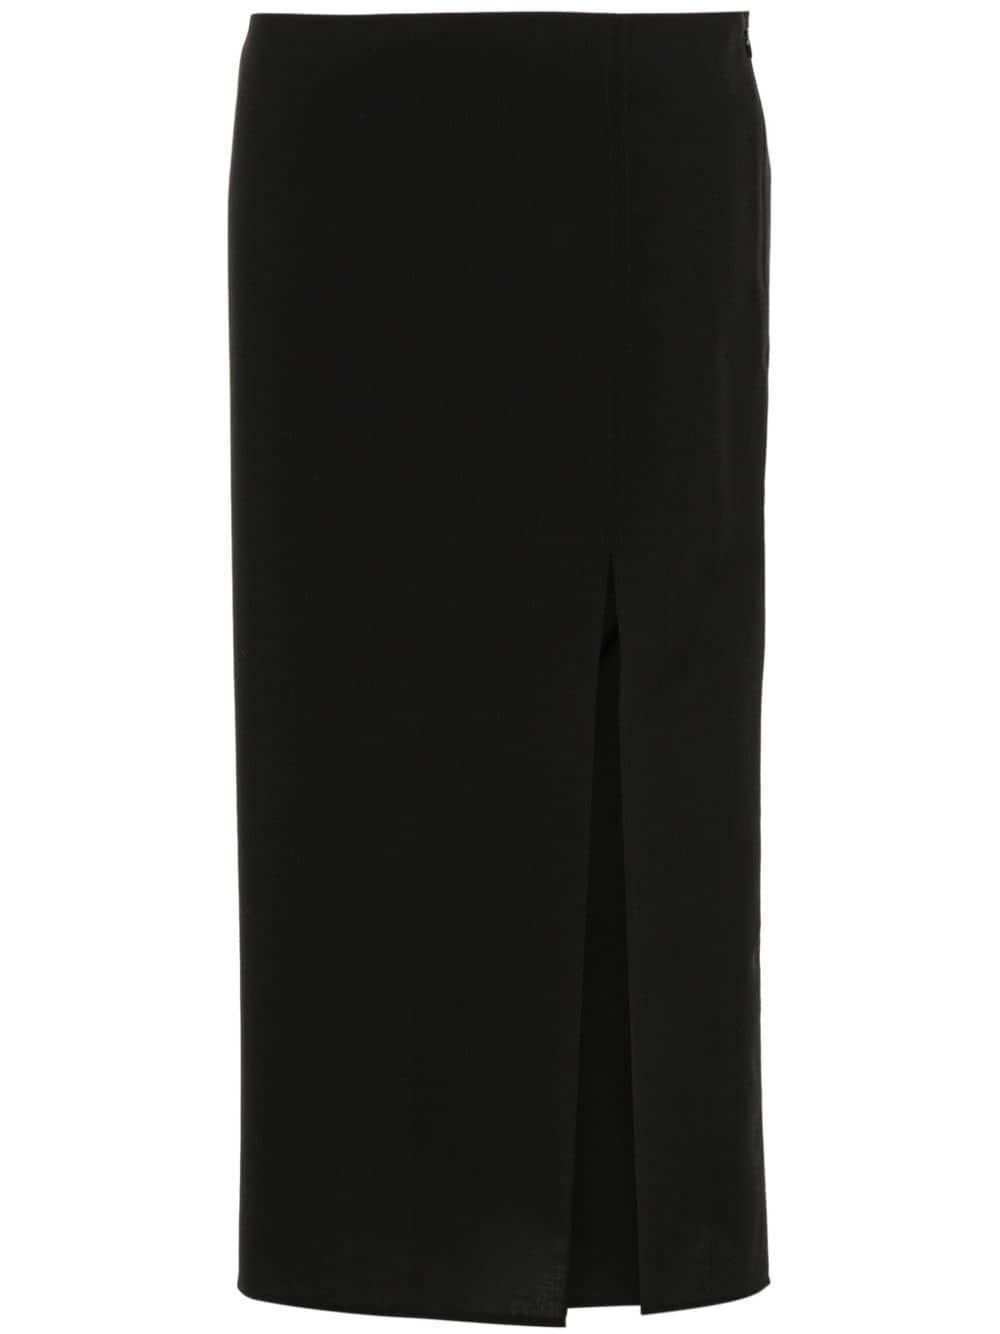 Gauchère Side-slit Wool Skirt In Schwarz